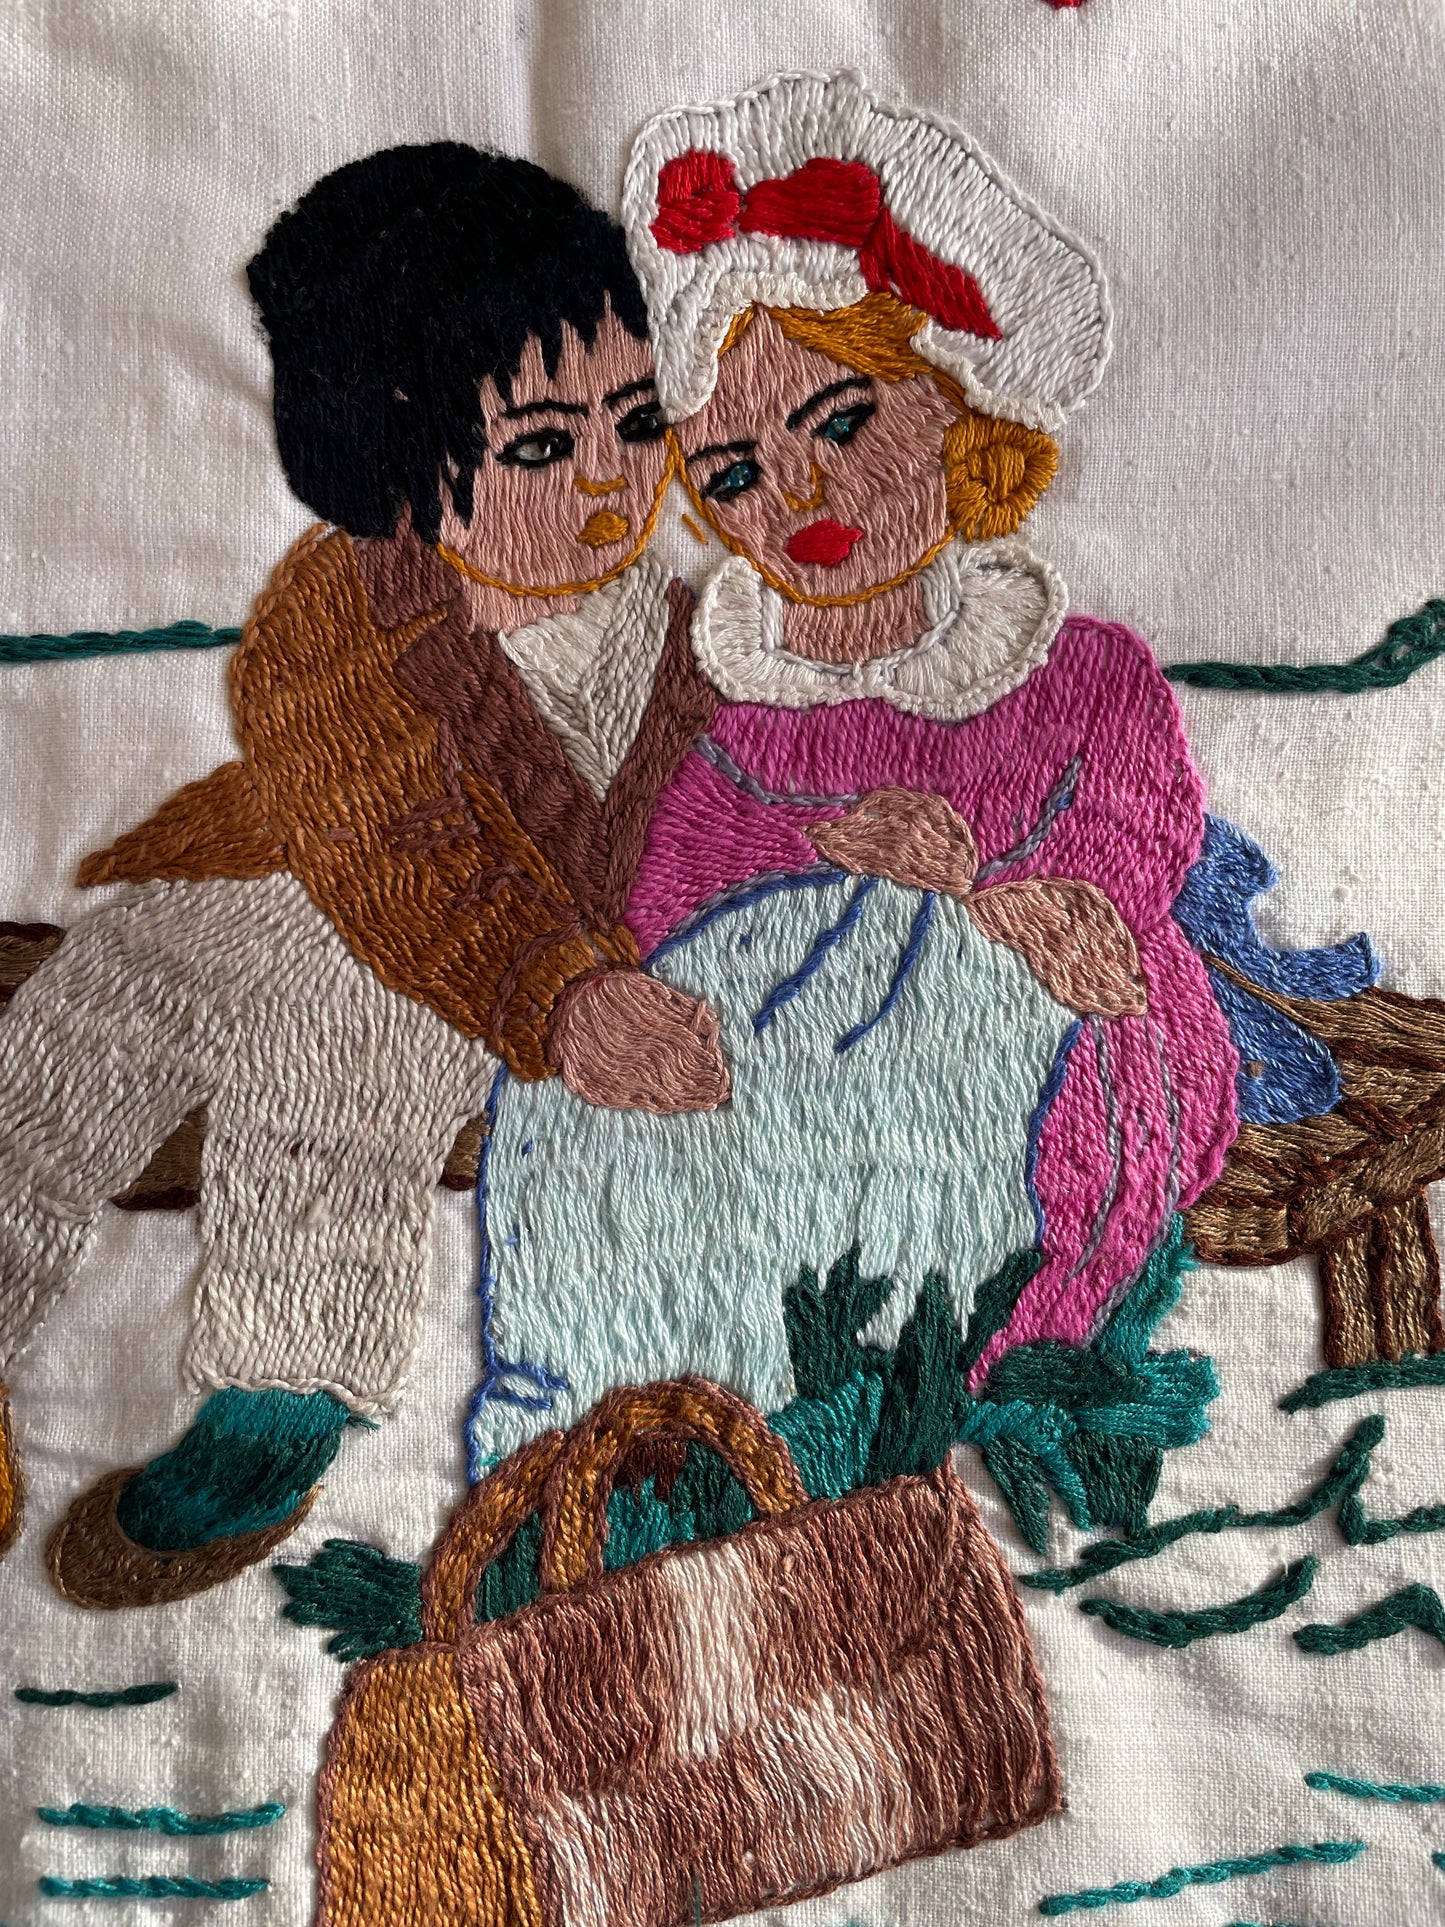 Kocham Cię ( I Love You) Embroidered Cushion Cover by Teresa